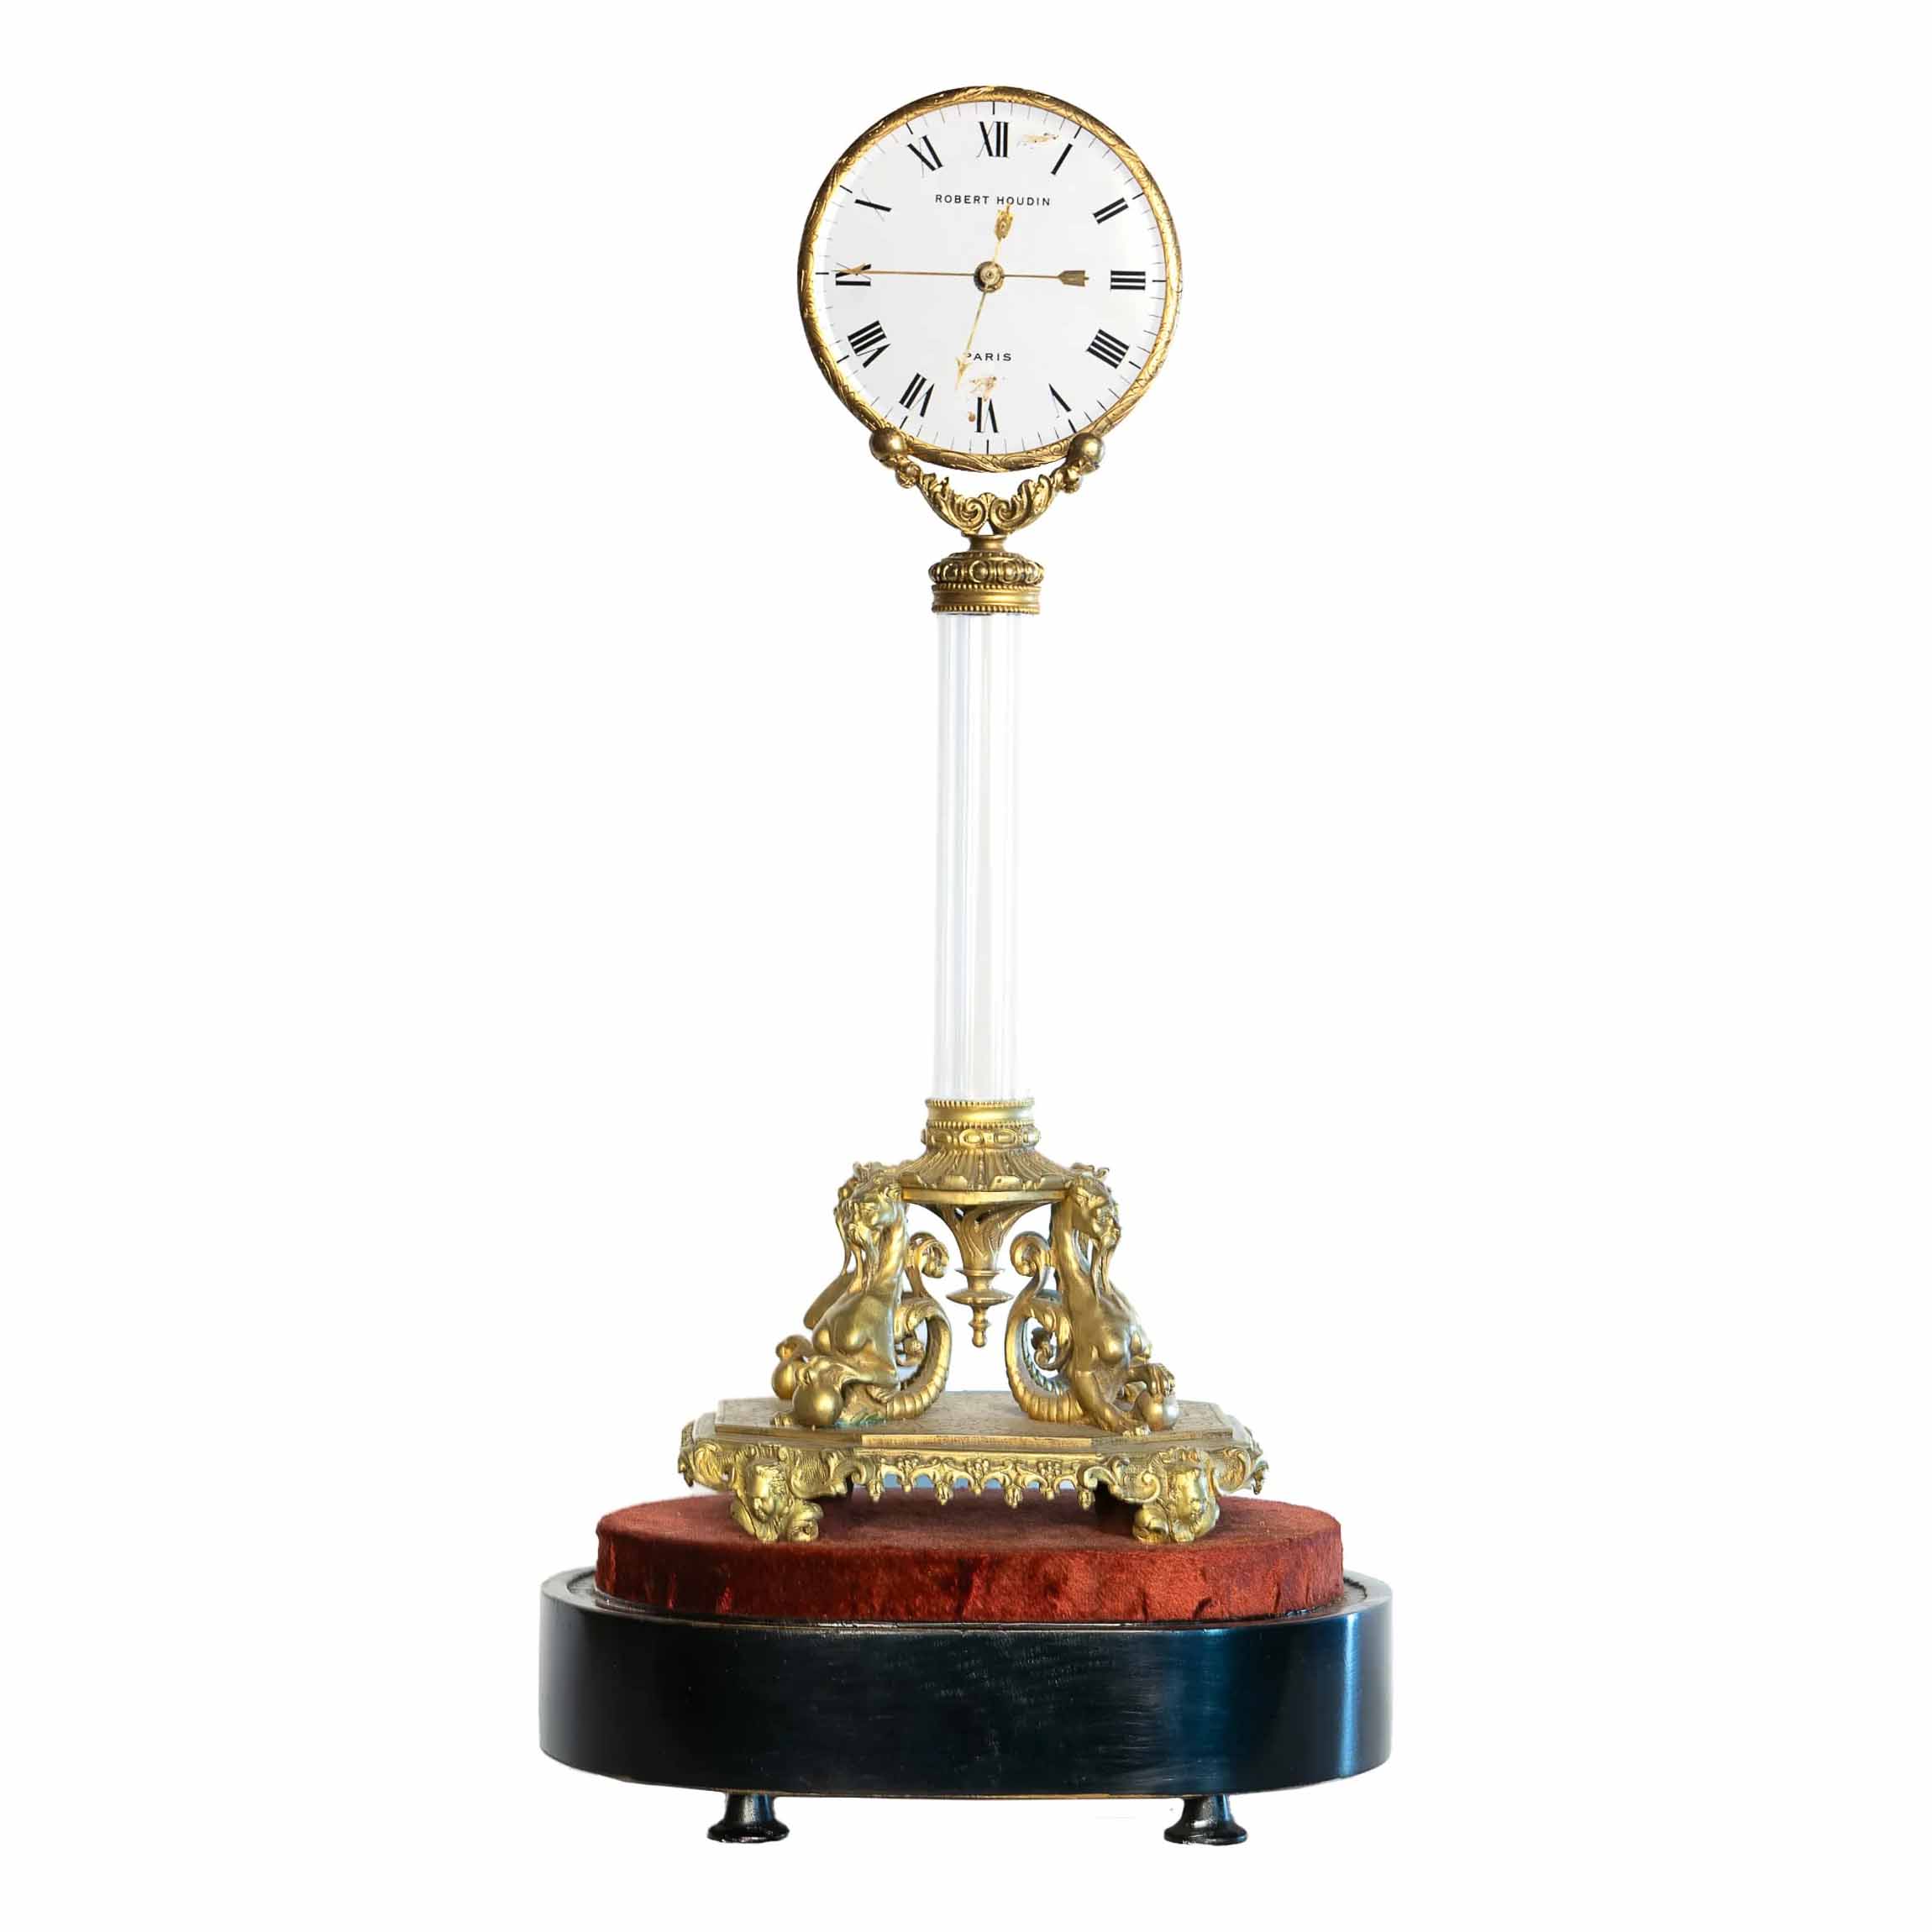 Robert-Houdin Triple mystery clock, estimated at $50,000-$70,000 at Potter & Potter.